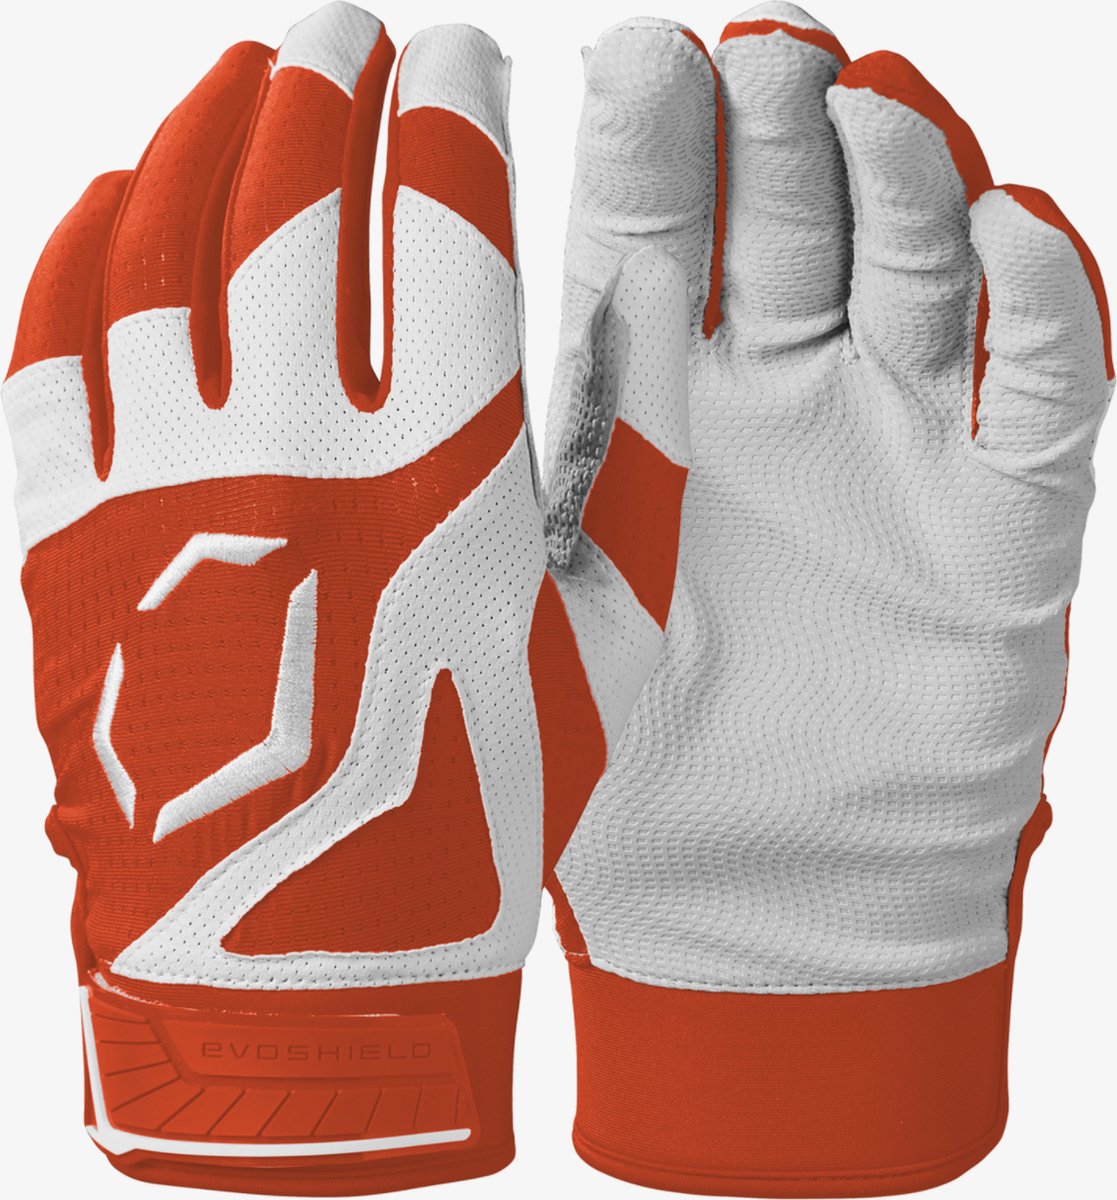 Evoshield SRZ-1 Batting Gloves - Orange - 2XL